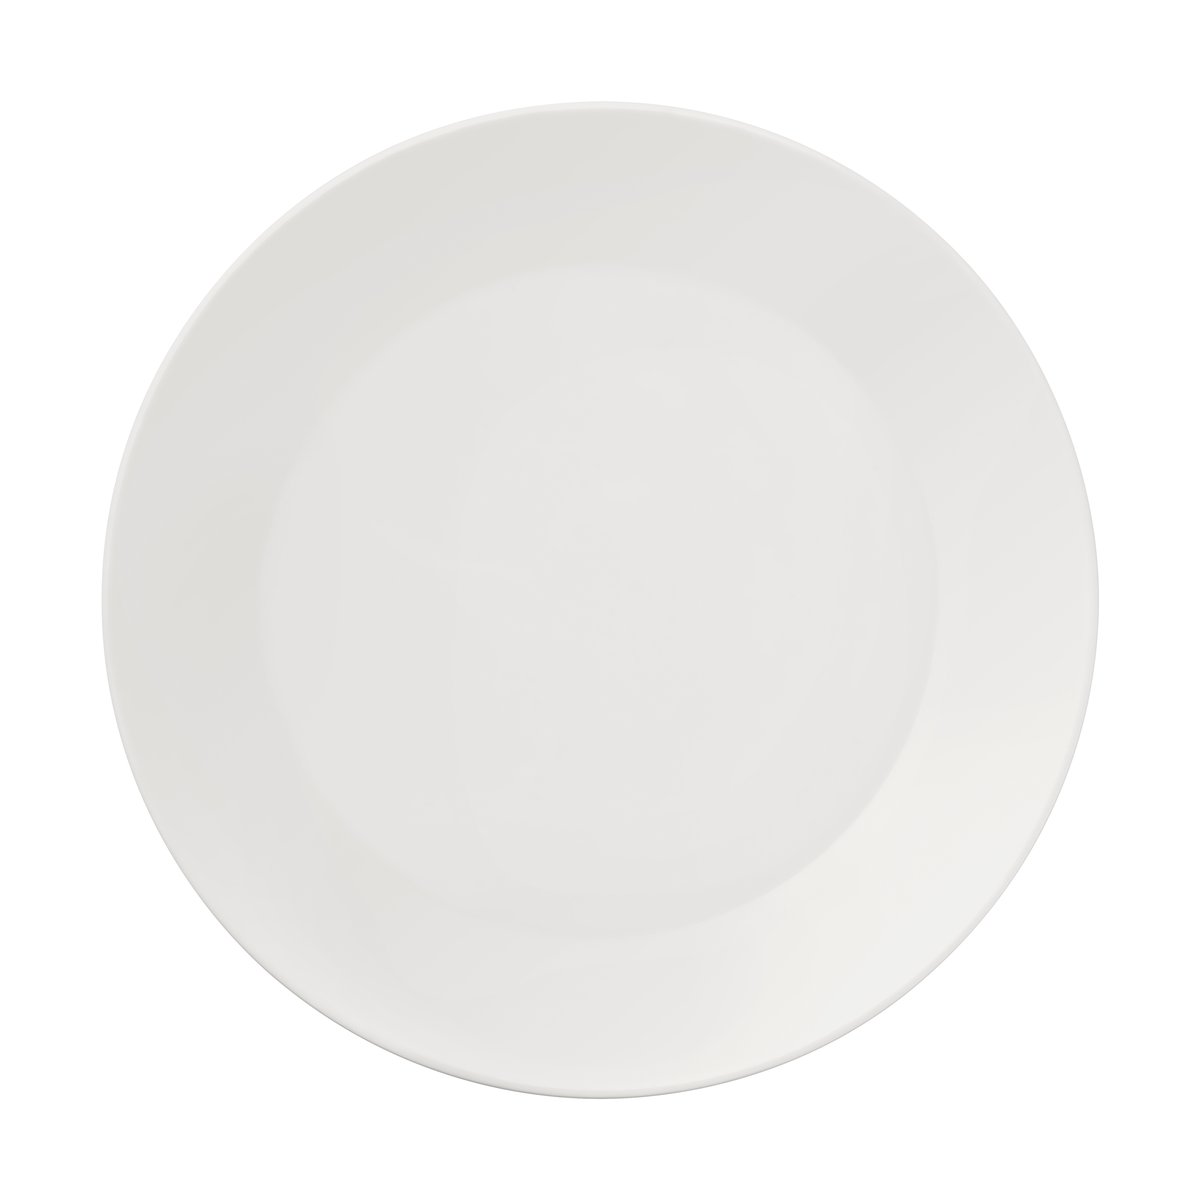 arabia assiette mainio ø19 cm blanc